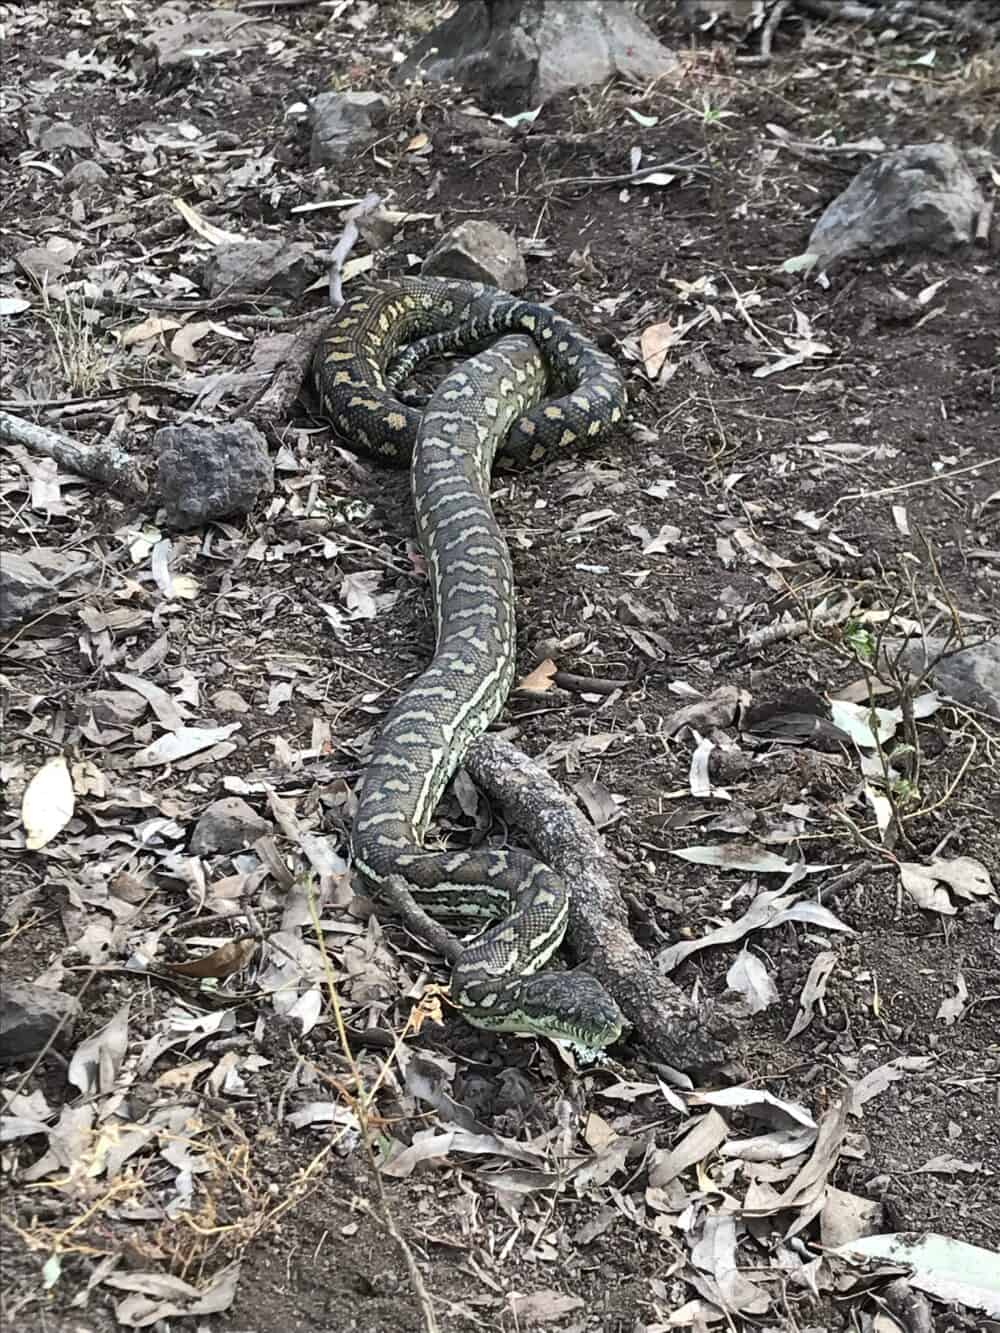 Python in backyard